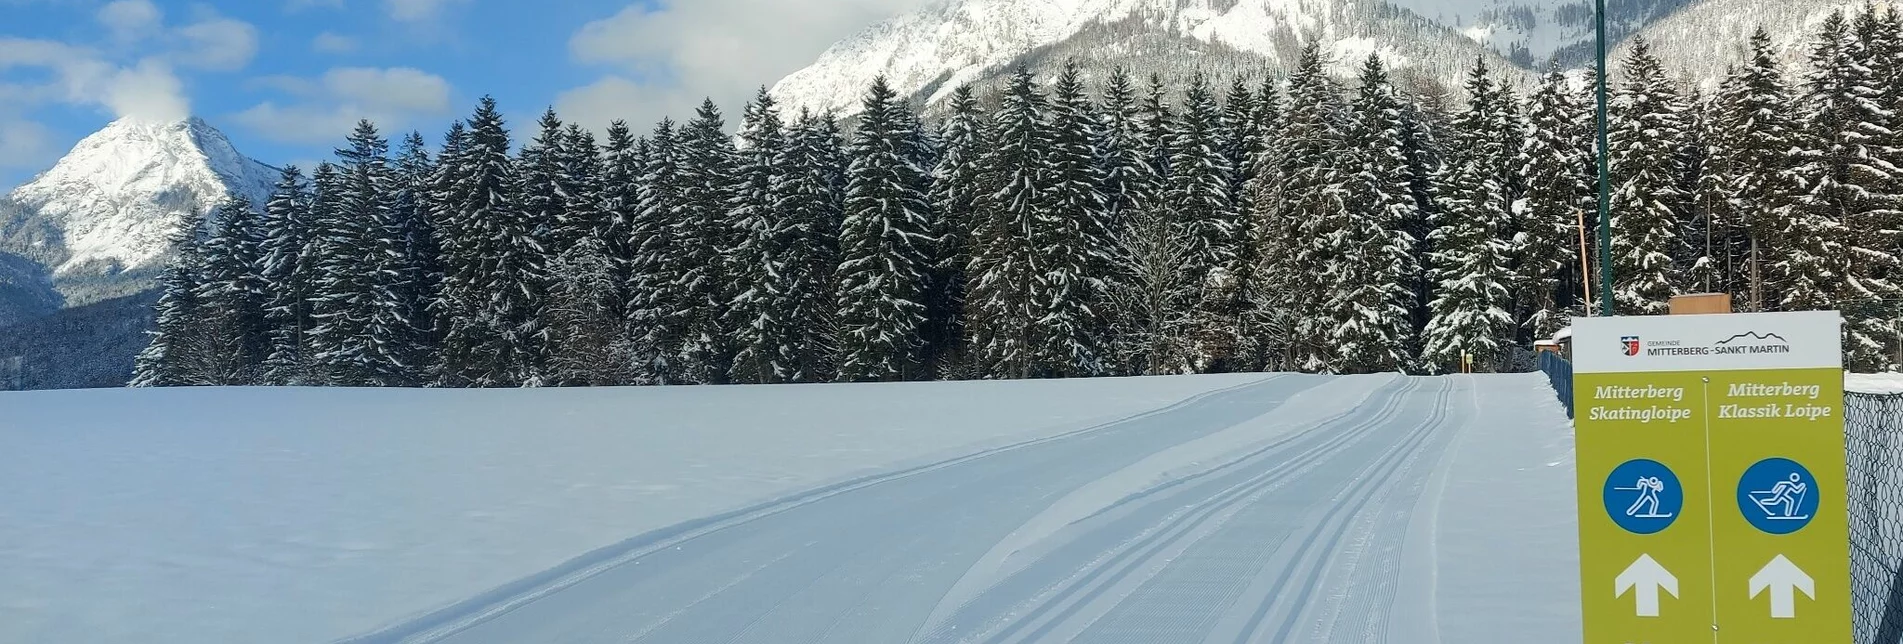 Cross-Country Skiing Mitterberg Classic XC Trail - Touren-Impression #1 | © Erlebnisregion Schladming-Dachstein